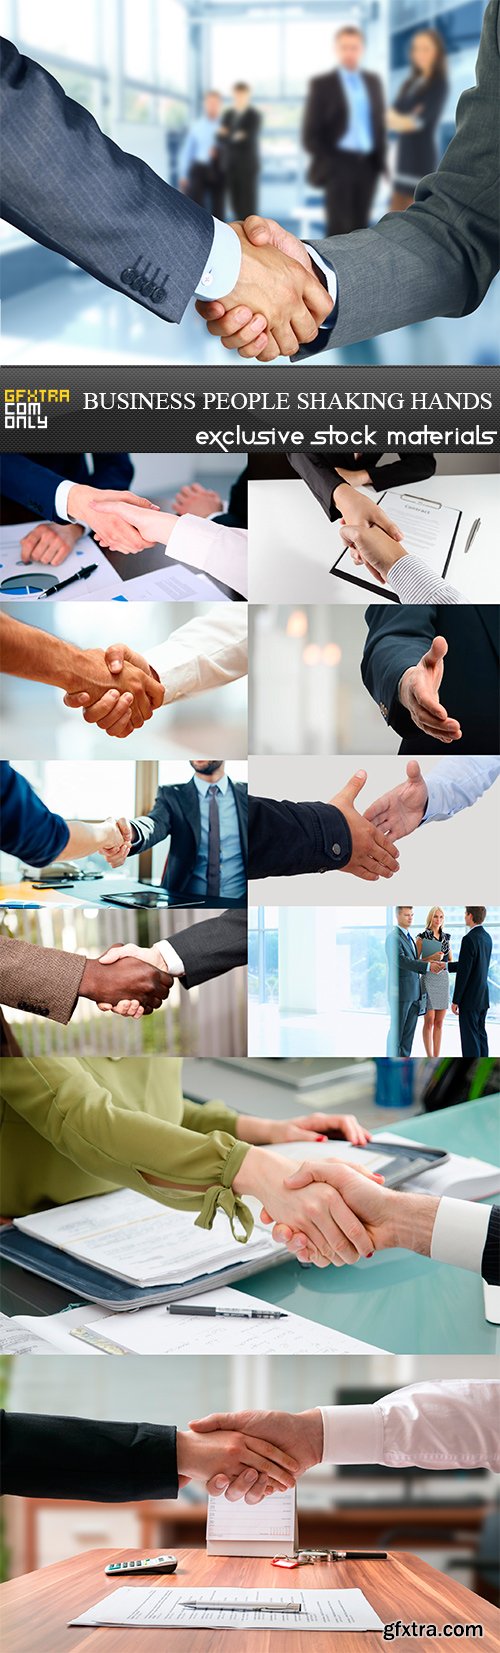 Business people shaking hands - 11UHQ JPEG